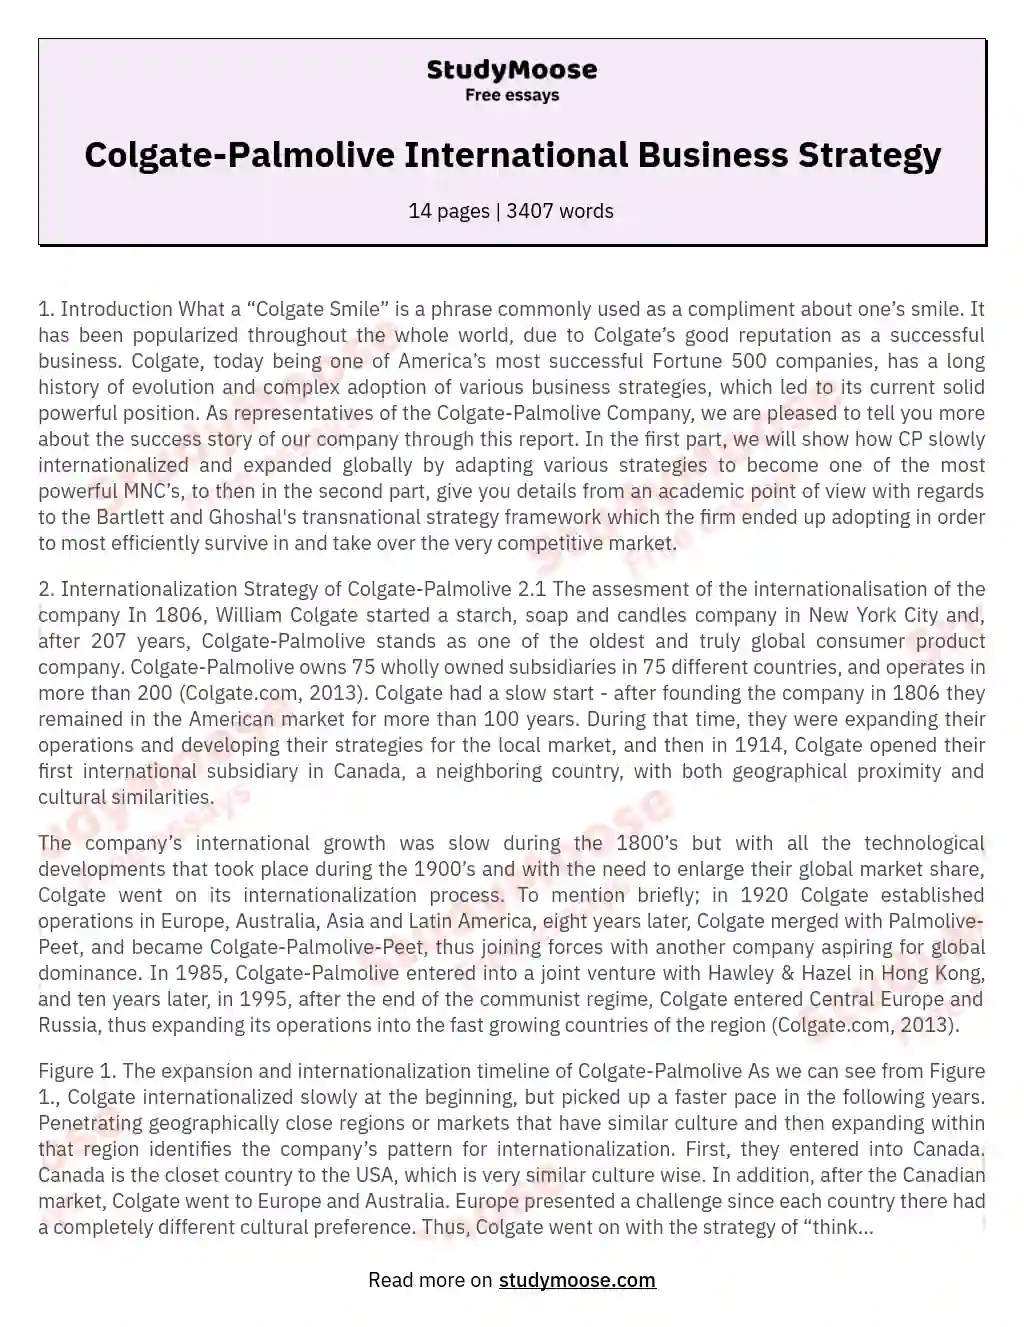 Colgate-Palmolive International Business Strategy essay